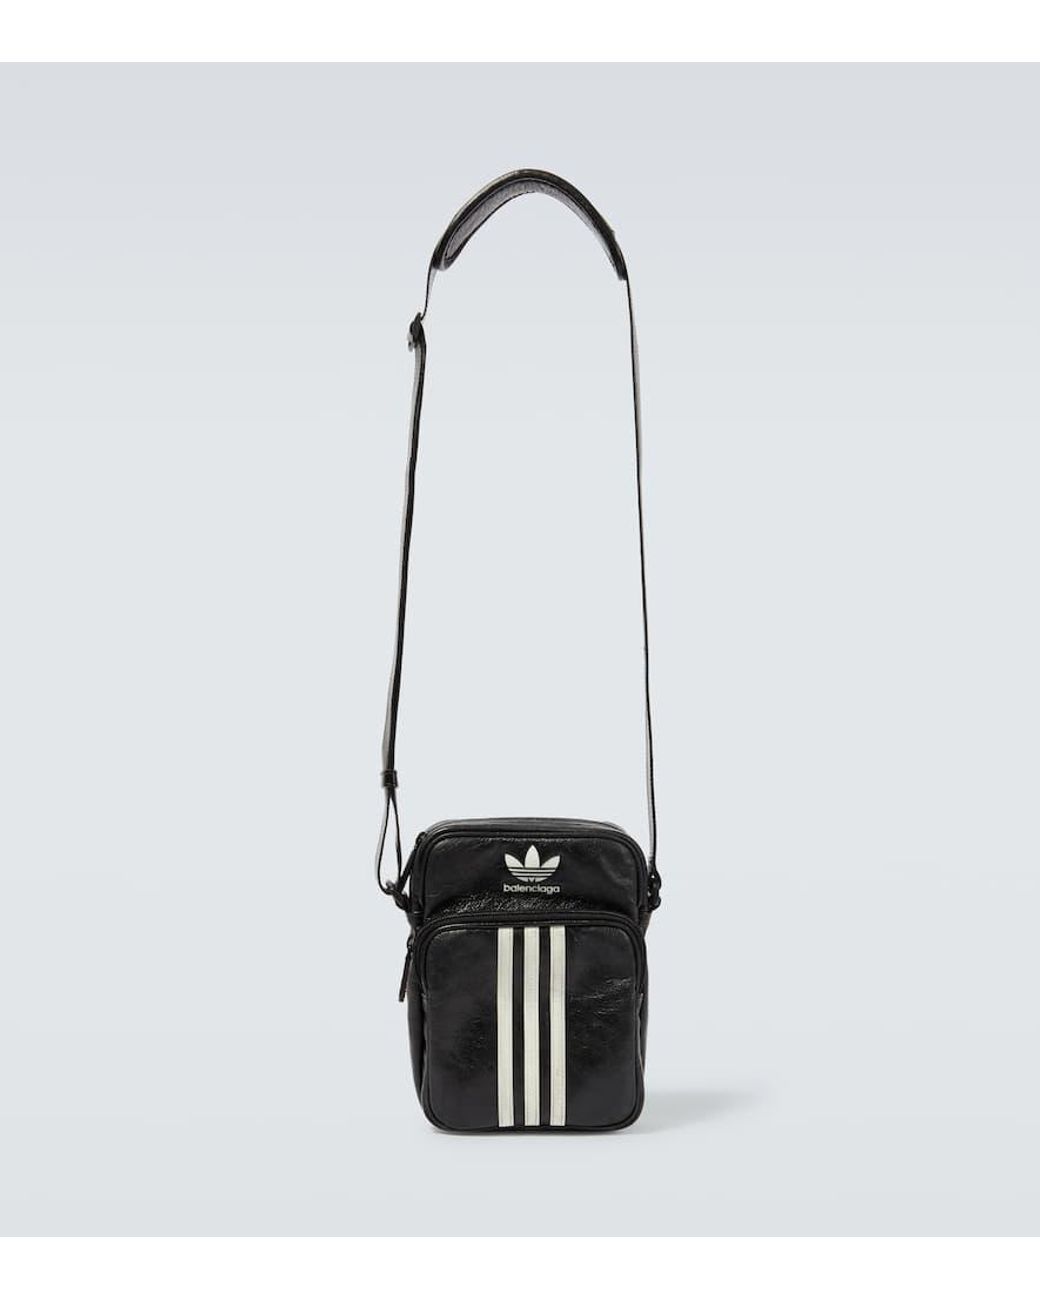 Adidas Unisex Waist Bag Pouch Black HT4777 Bag Classic Foundation Waist Bag  | eBay